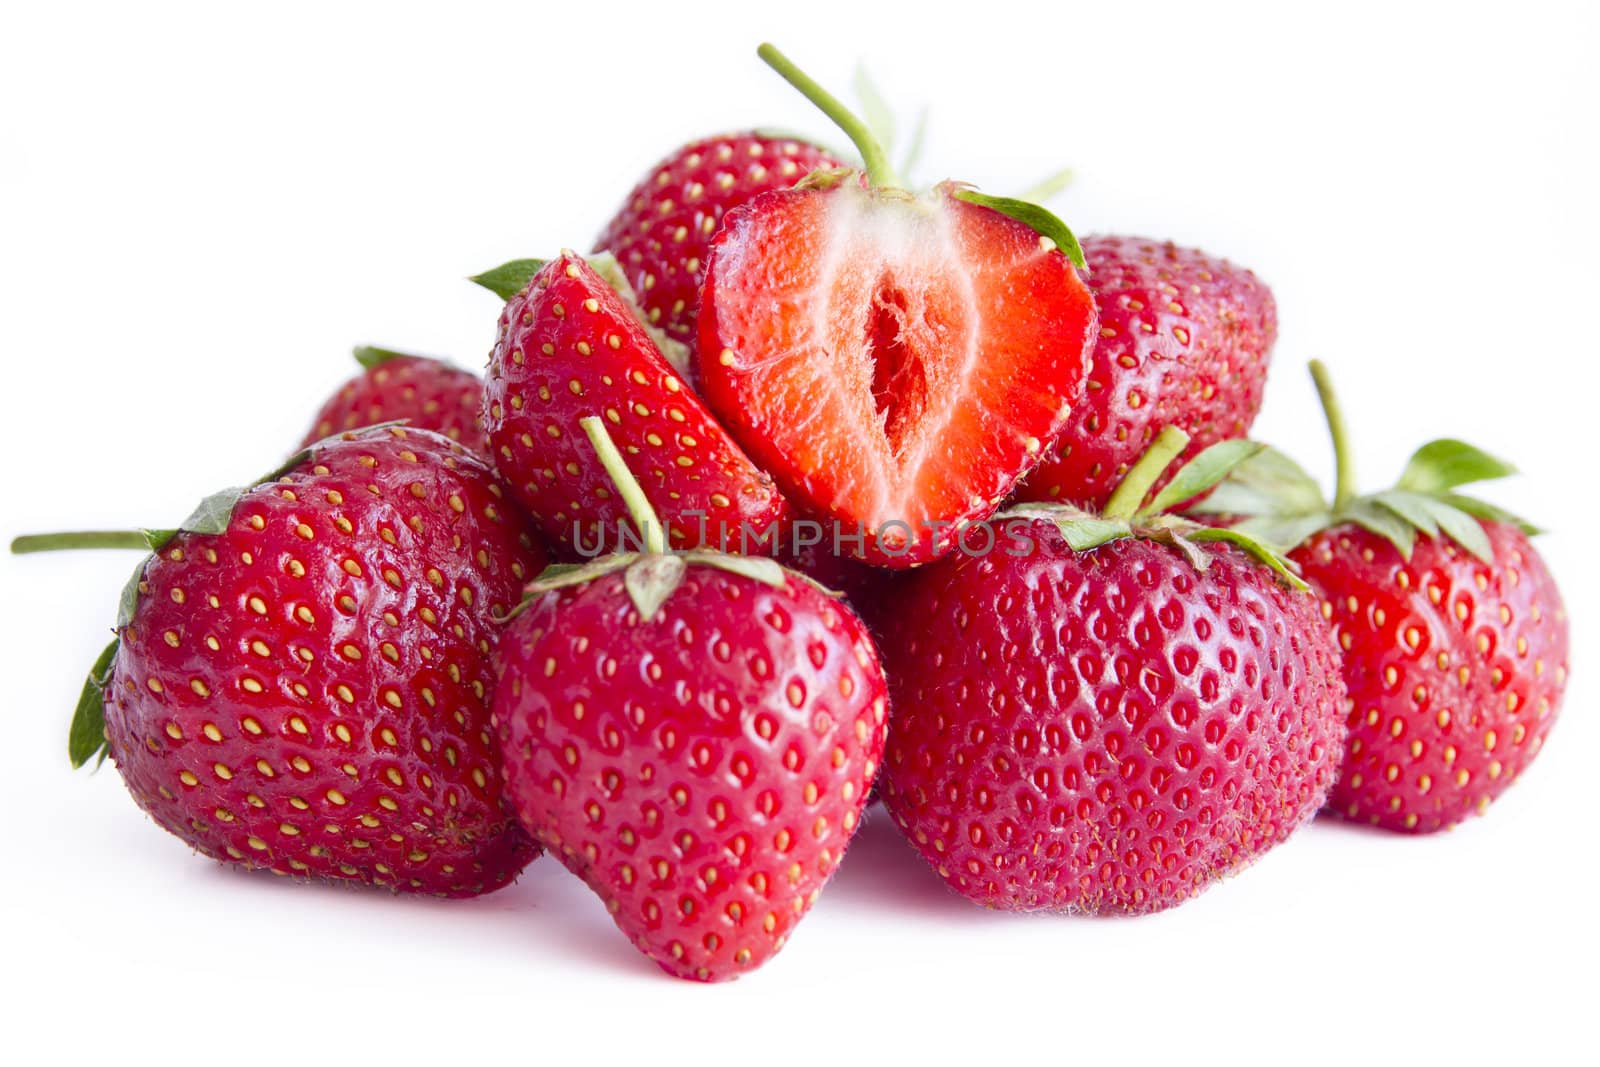 strawberry on white background shot in studio